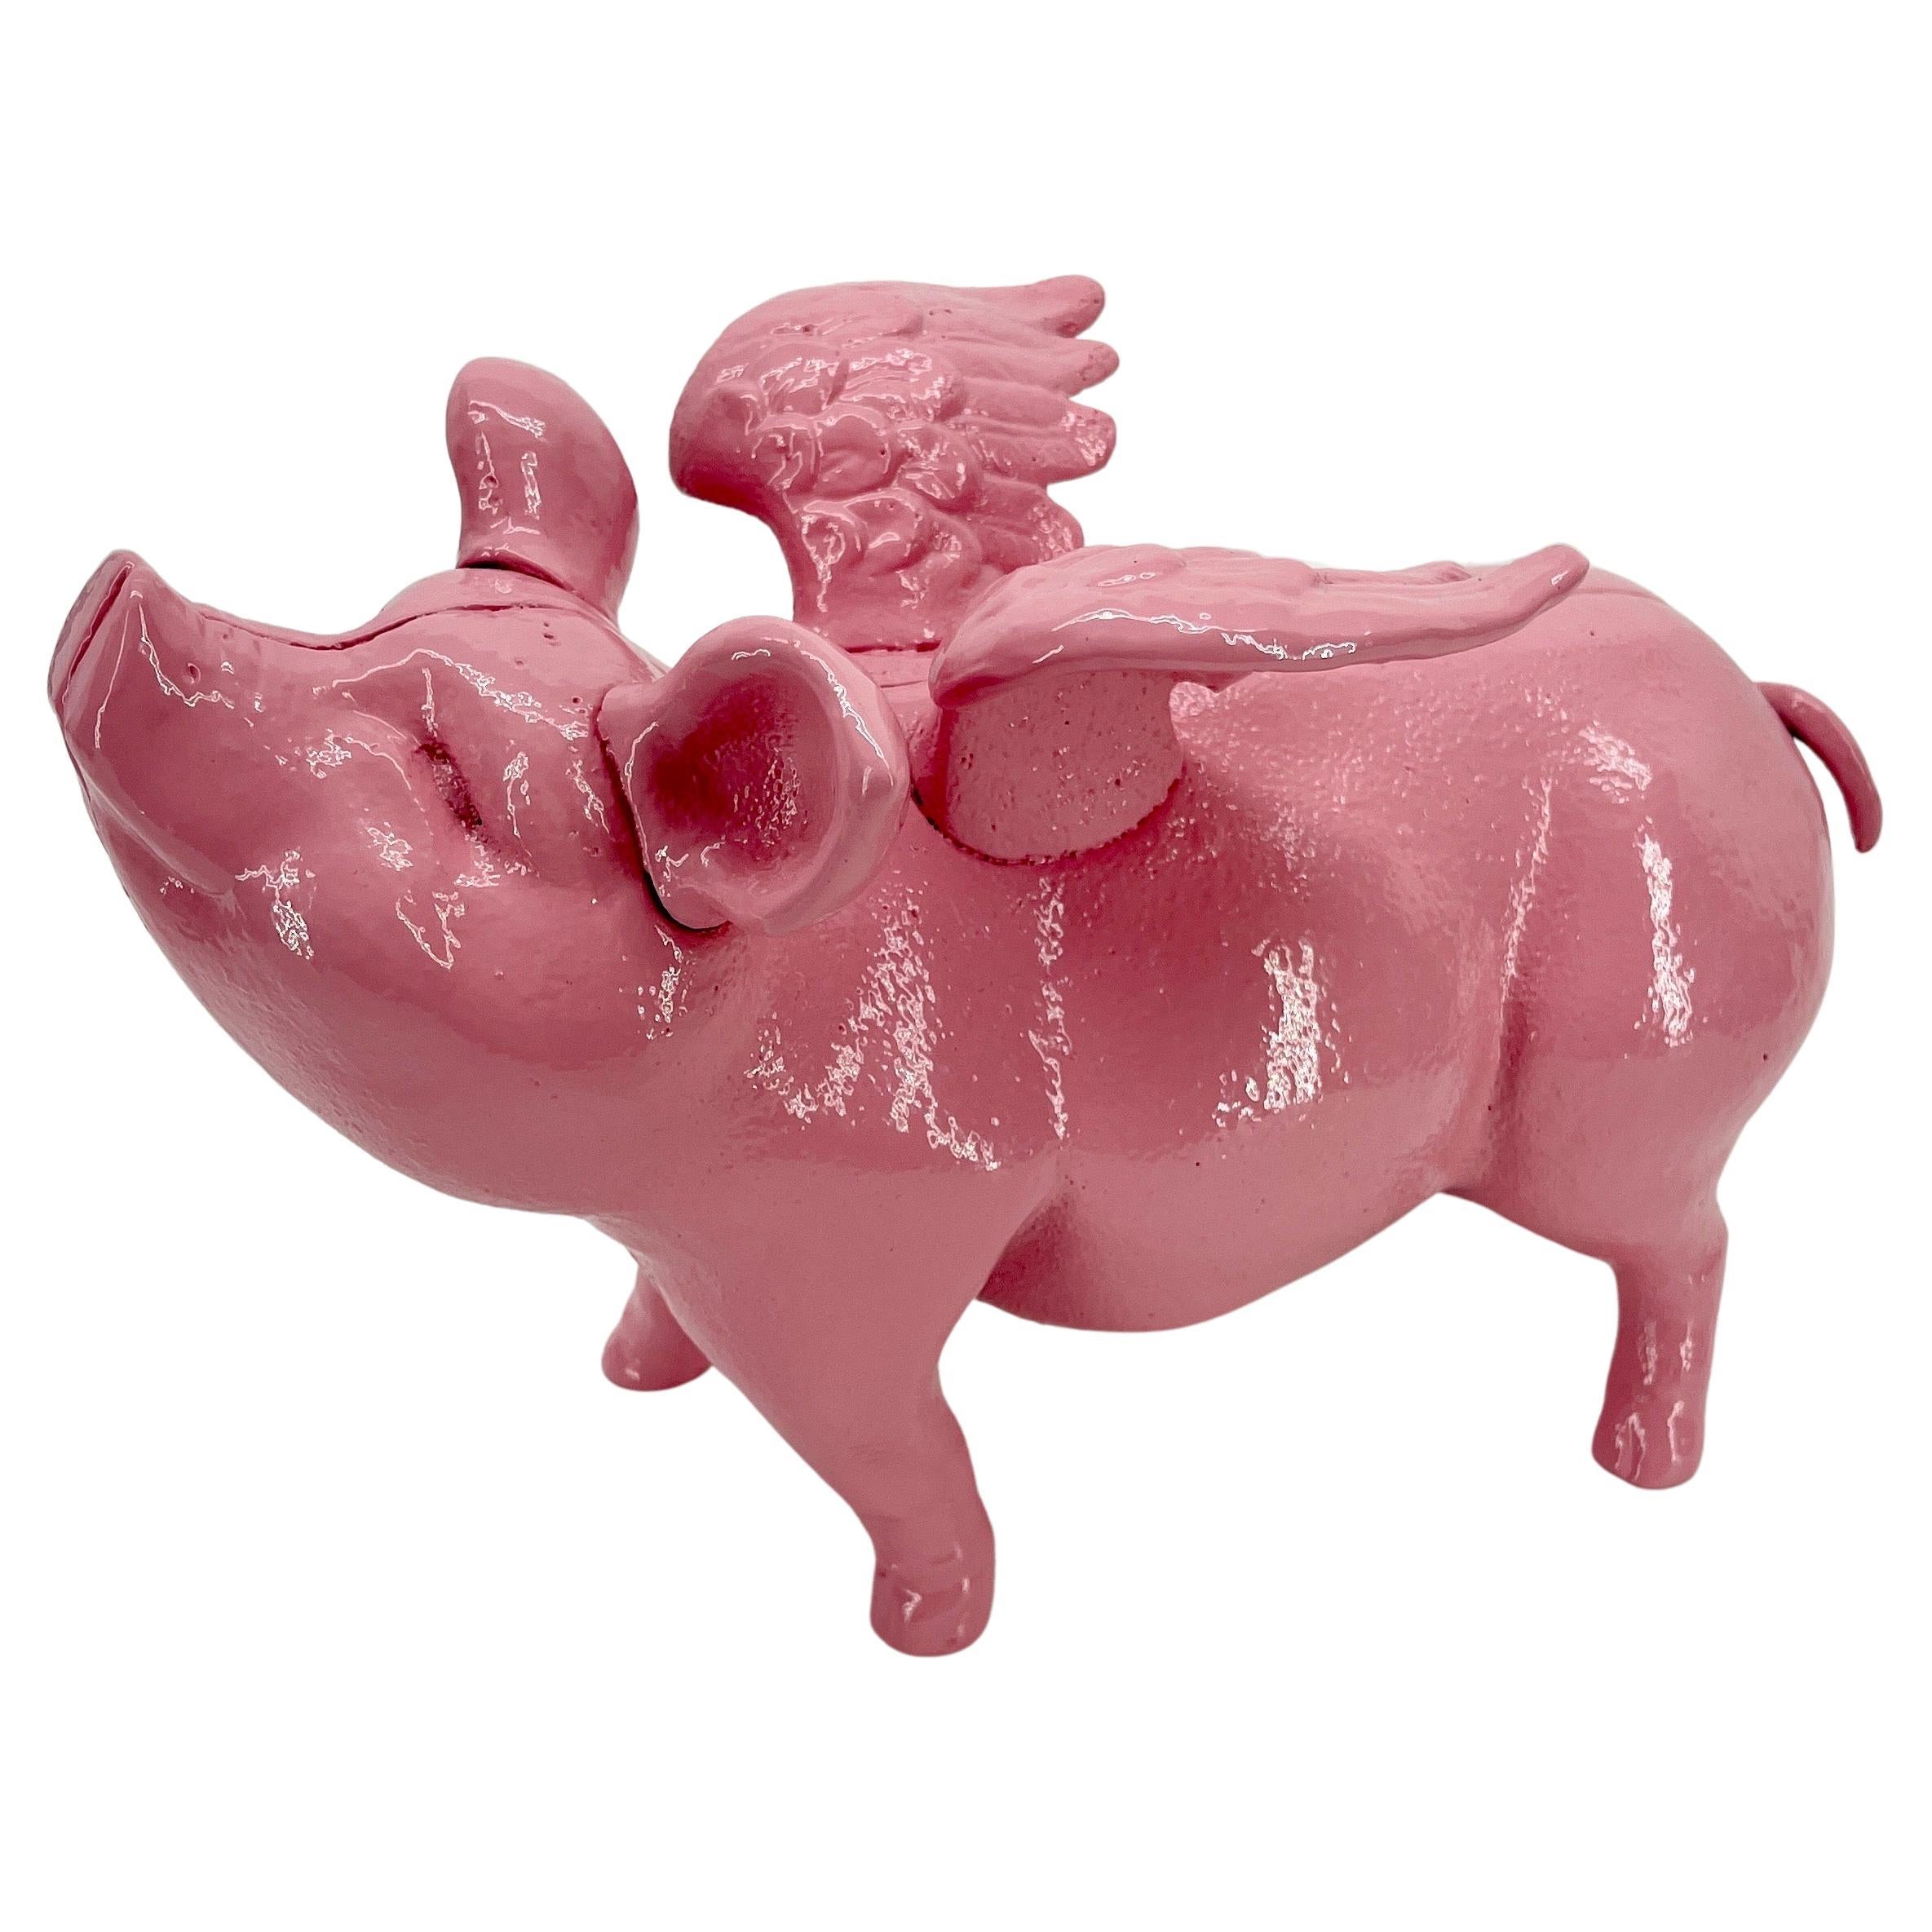 When Pigs Fly 15.5cm Animal Figurine Medium 